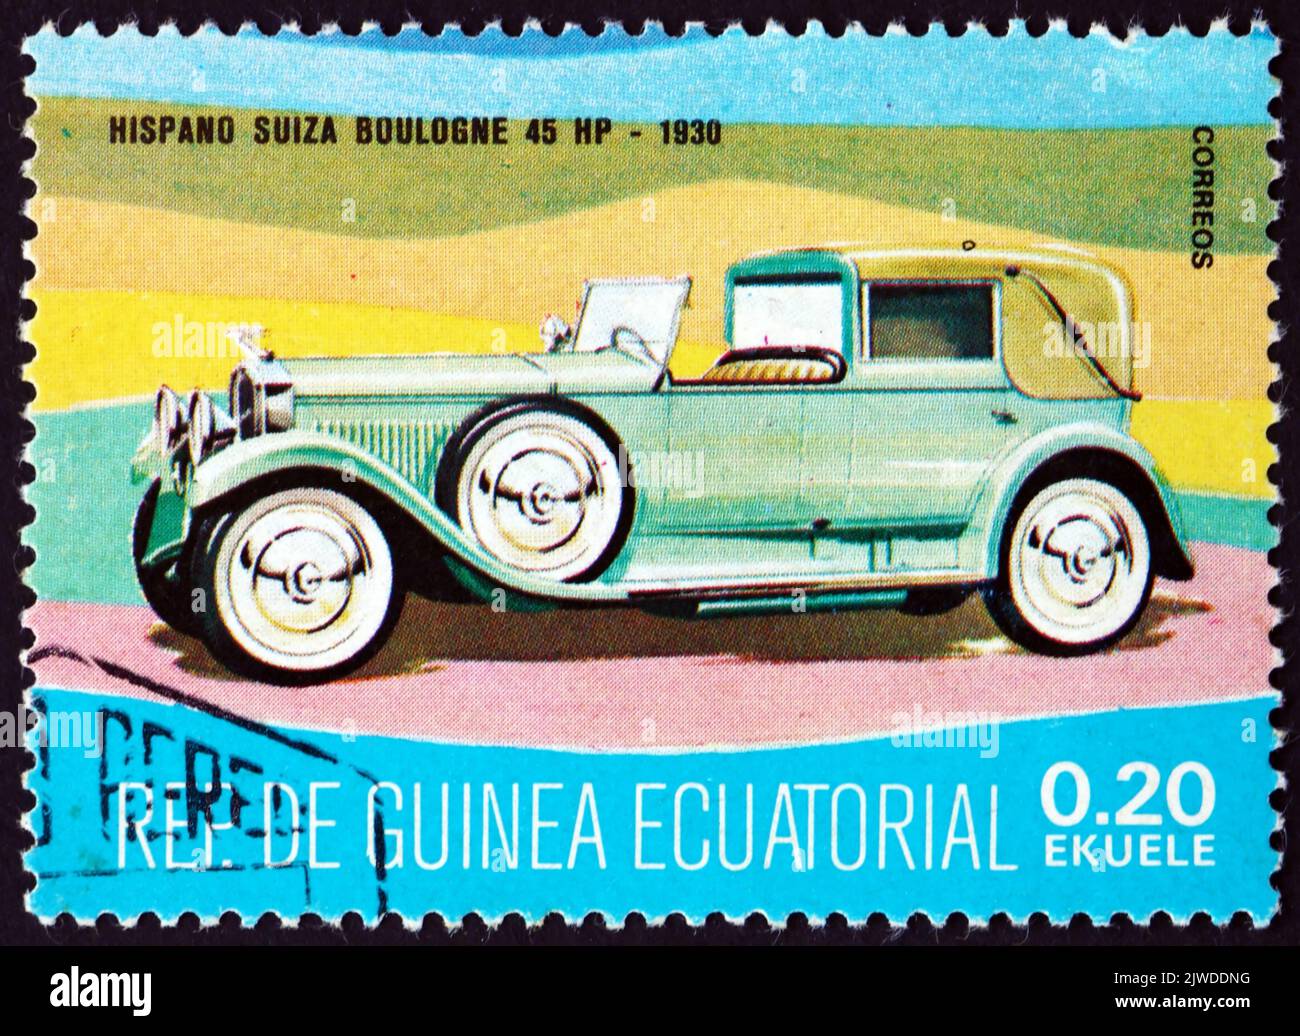 EQUATORIAL GUINEA - CIRCA 1977: a stamp printed in Equatorial Guinea shows Hispano-Suiza Boulogne 45HP, 1930, oldtimer, circa 1977 Stock Photo